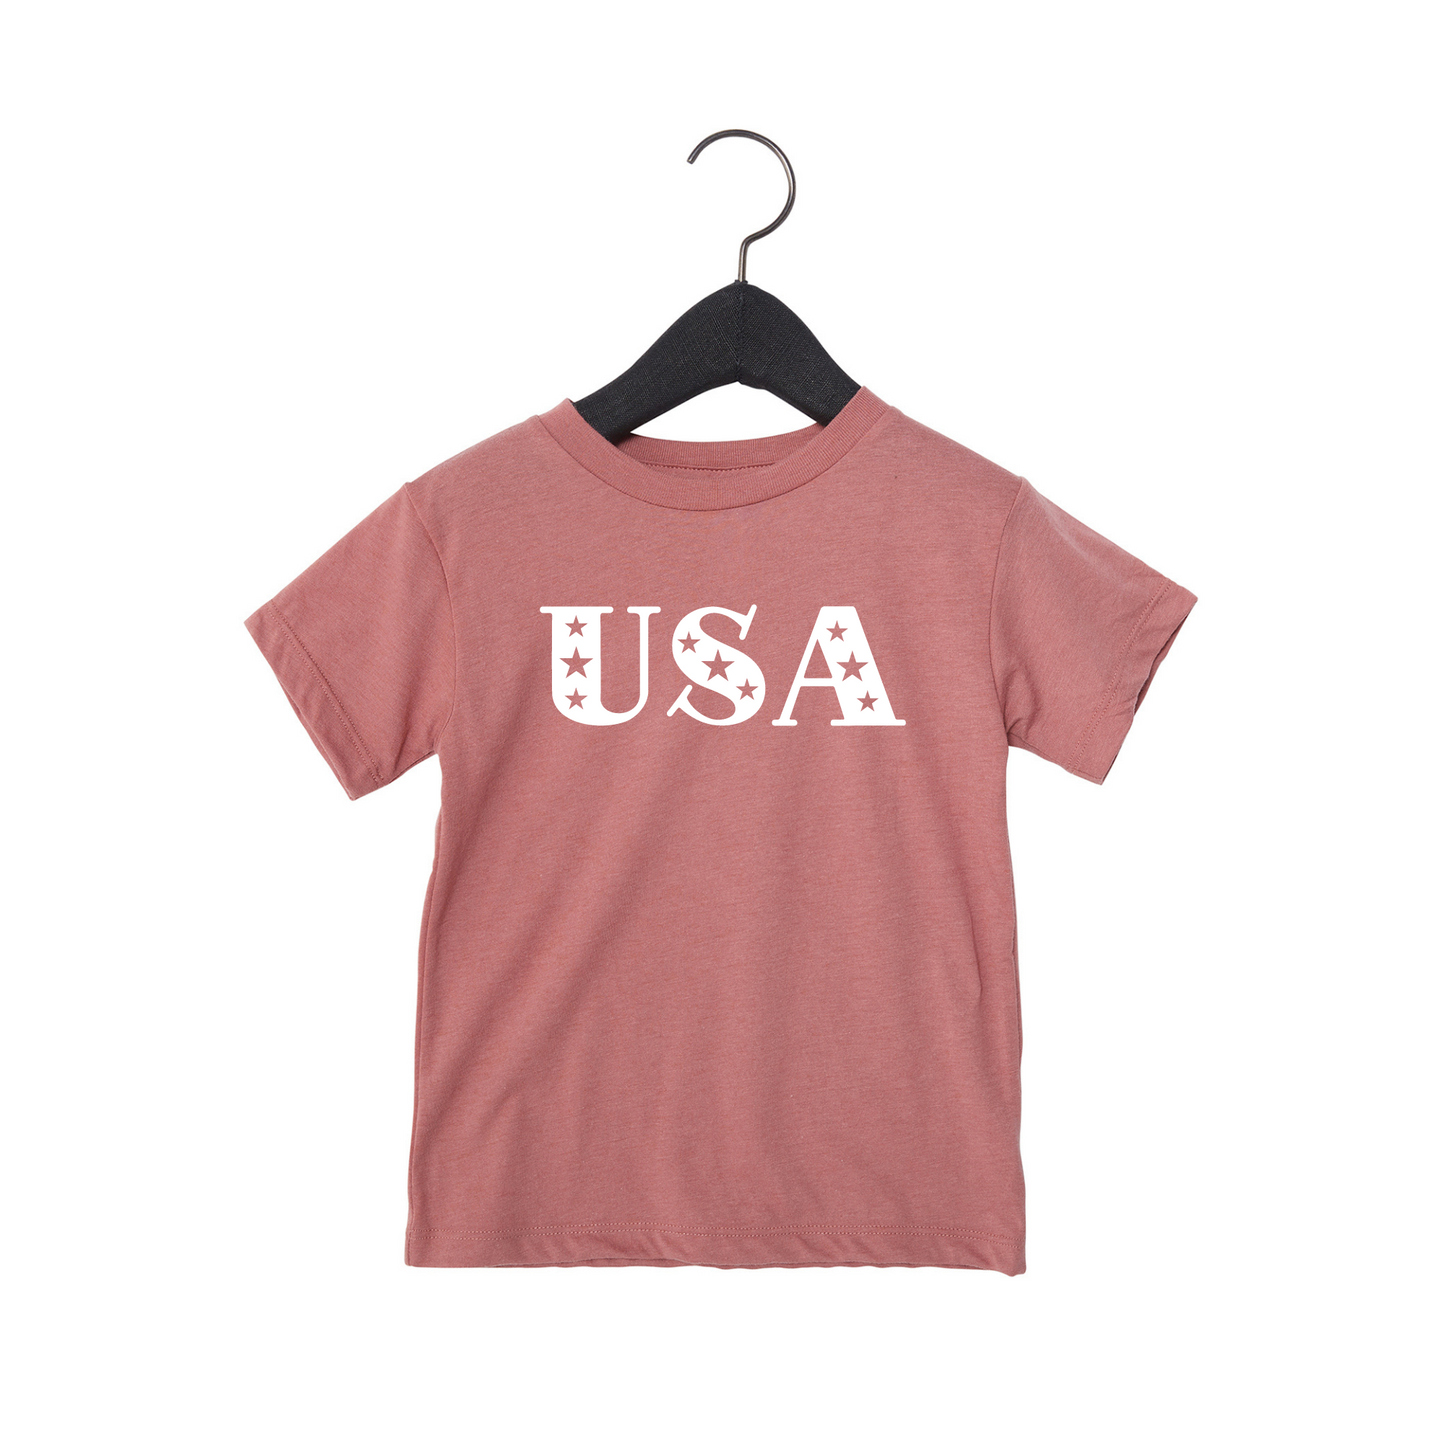 USA | Short Sleeve Youth Tee